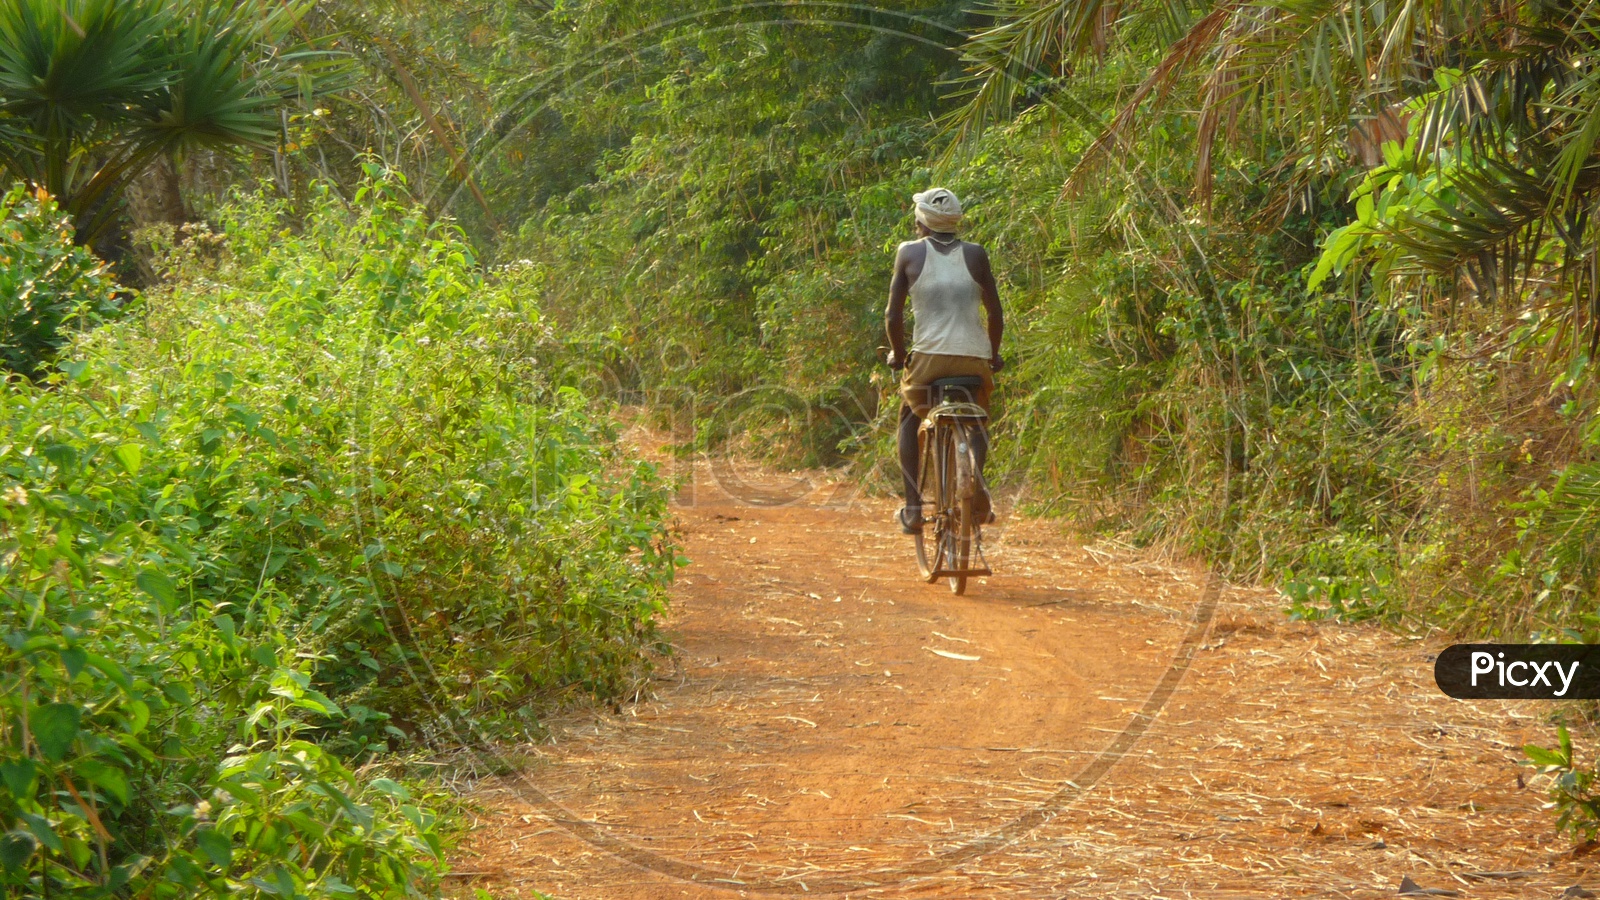 Farmer on Bicycle